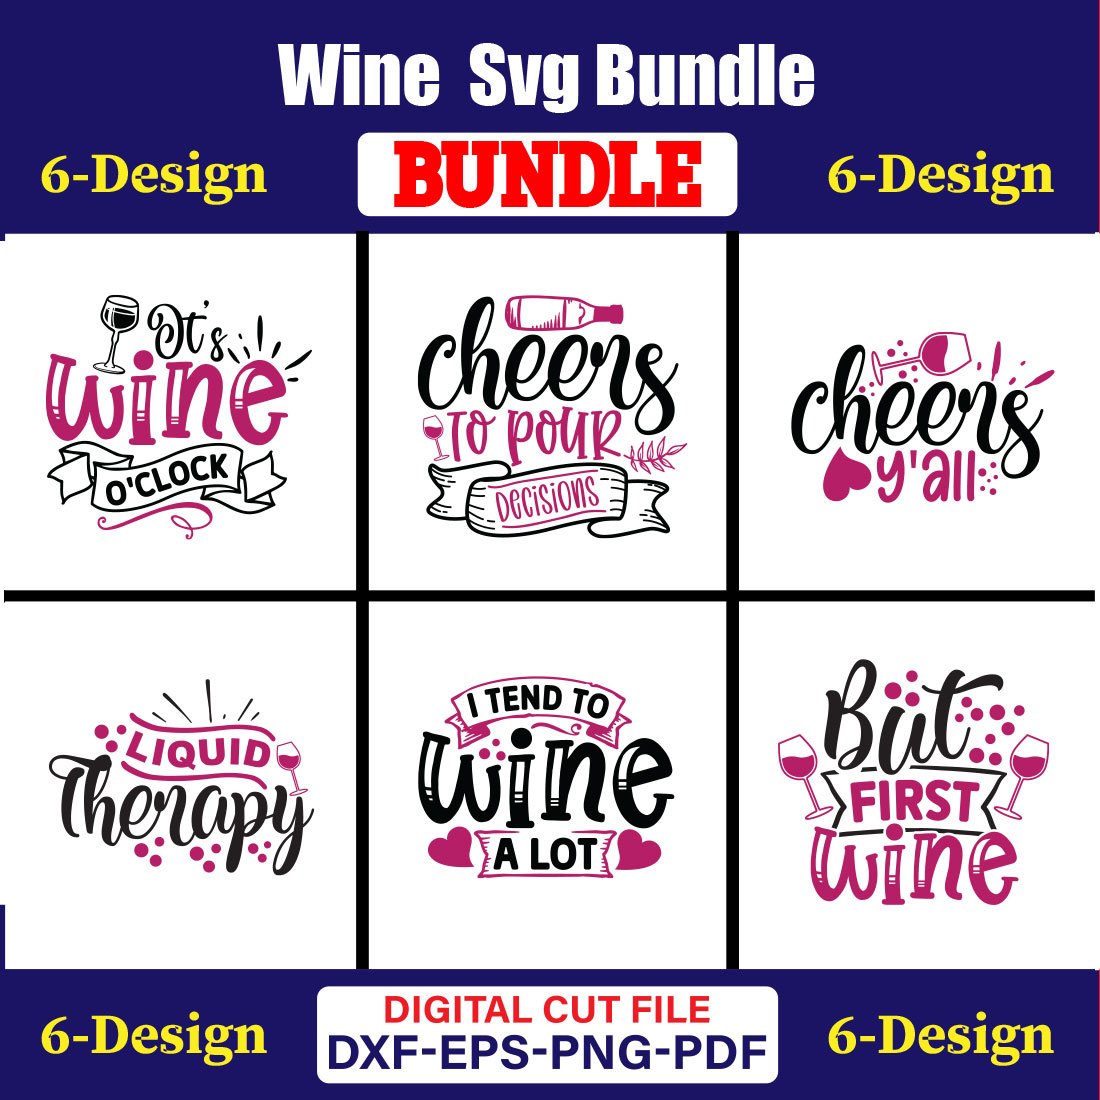 Wine T-shirt Design Bundle Vol-03 cover image.